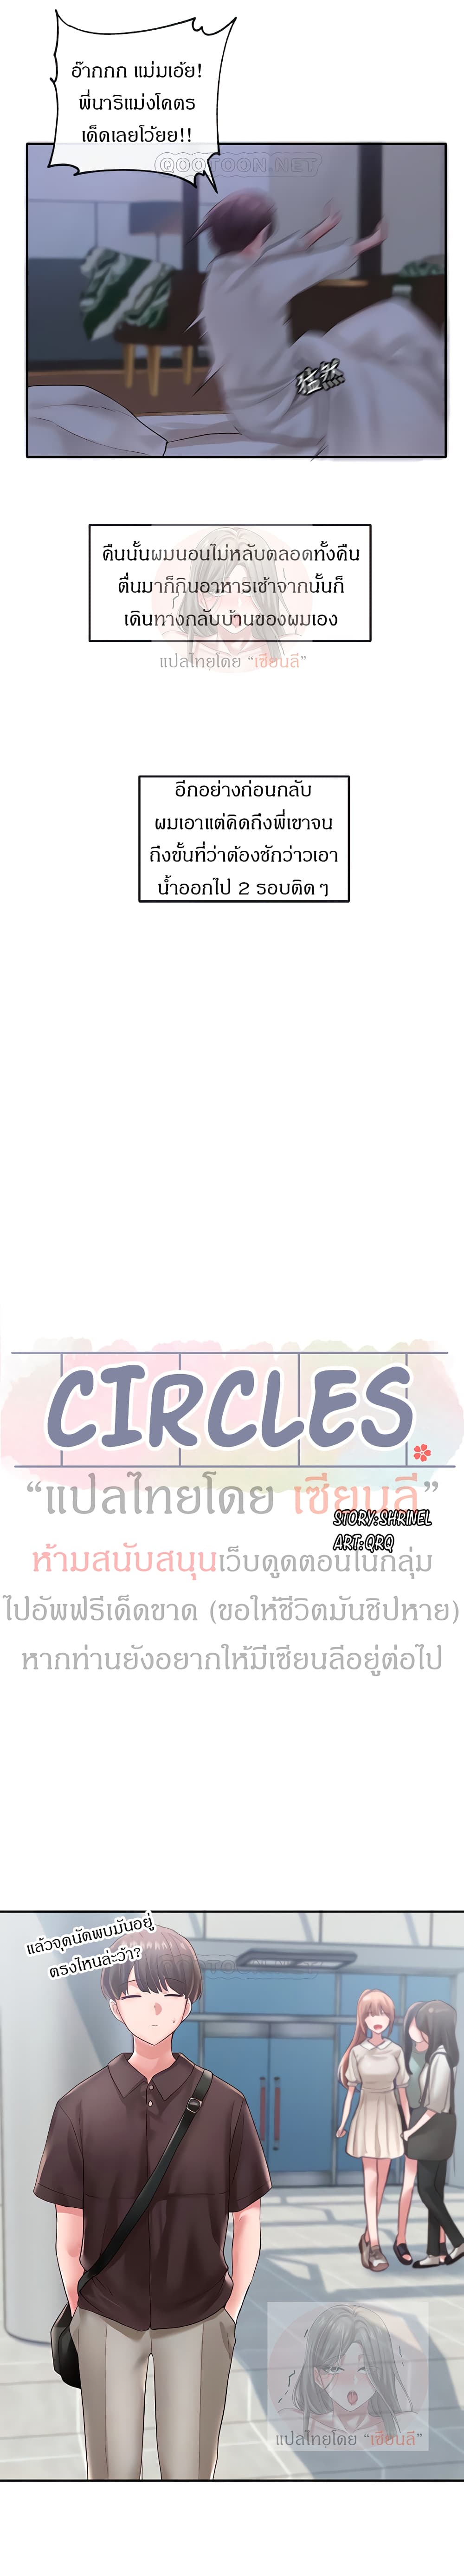 Theater Society (Circles)